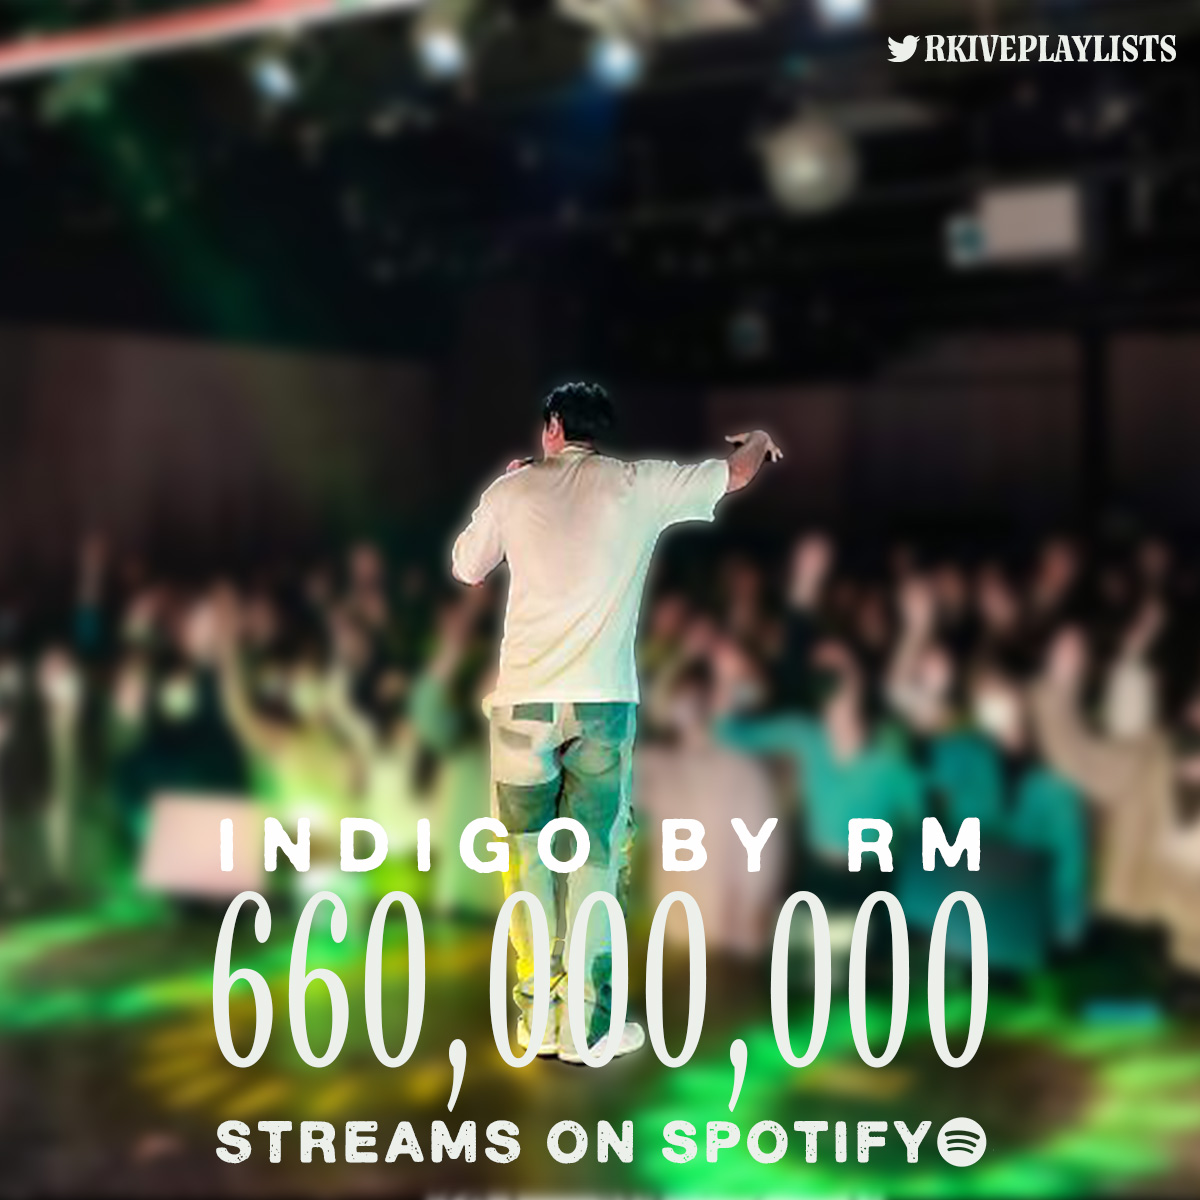 #RM’s solo debut album Indigo has surpassed 660 million streams on Spotify! 💙open.spotify.com/album/2wGinO7Y…